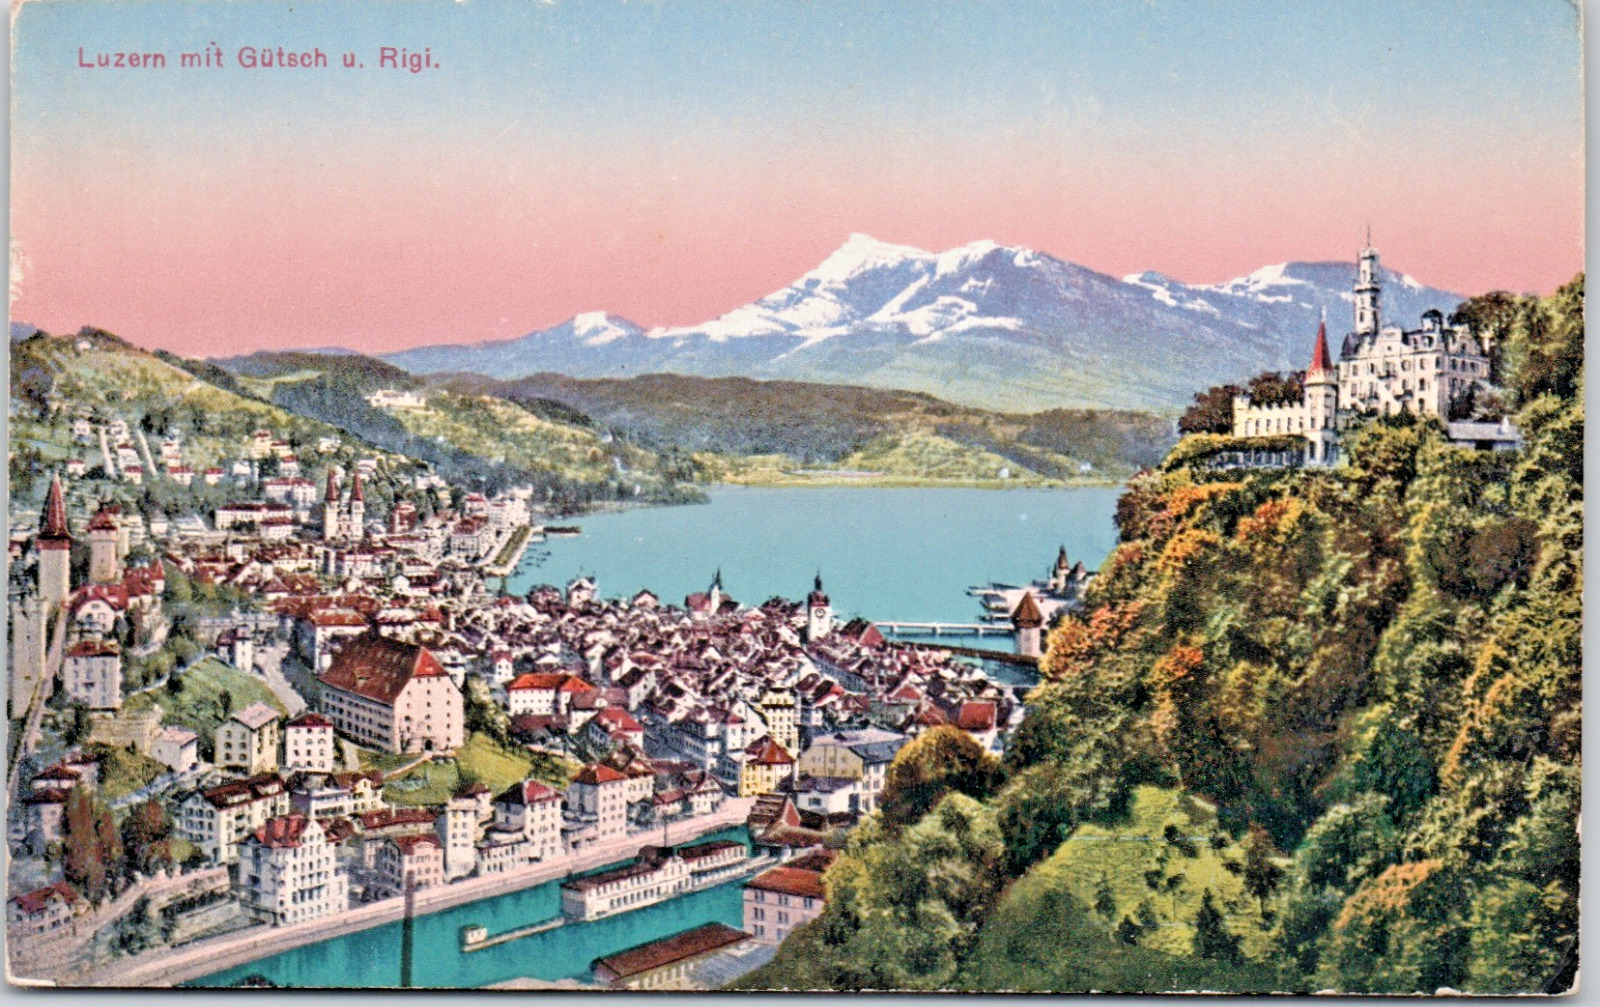 Lucern With Gutsch And Rigi Switzerland Lakes Alps Aerial View Vintage Postcard